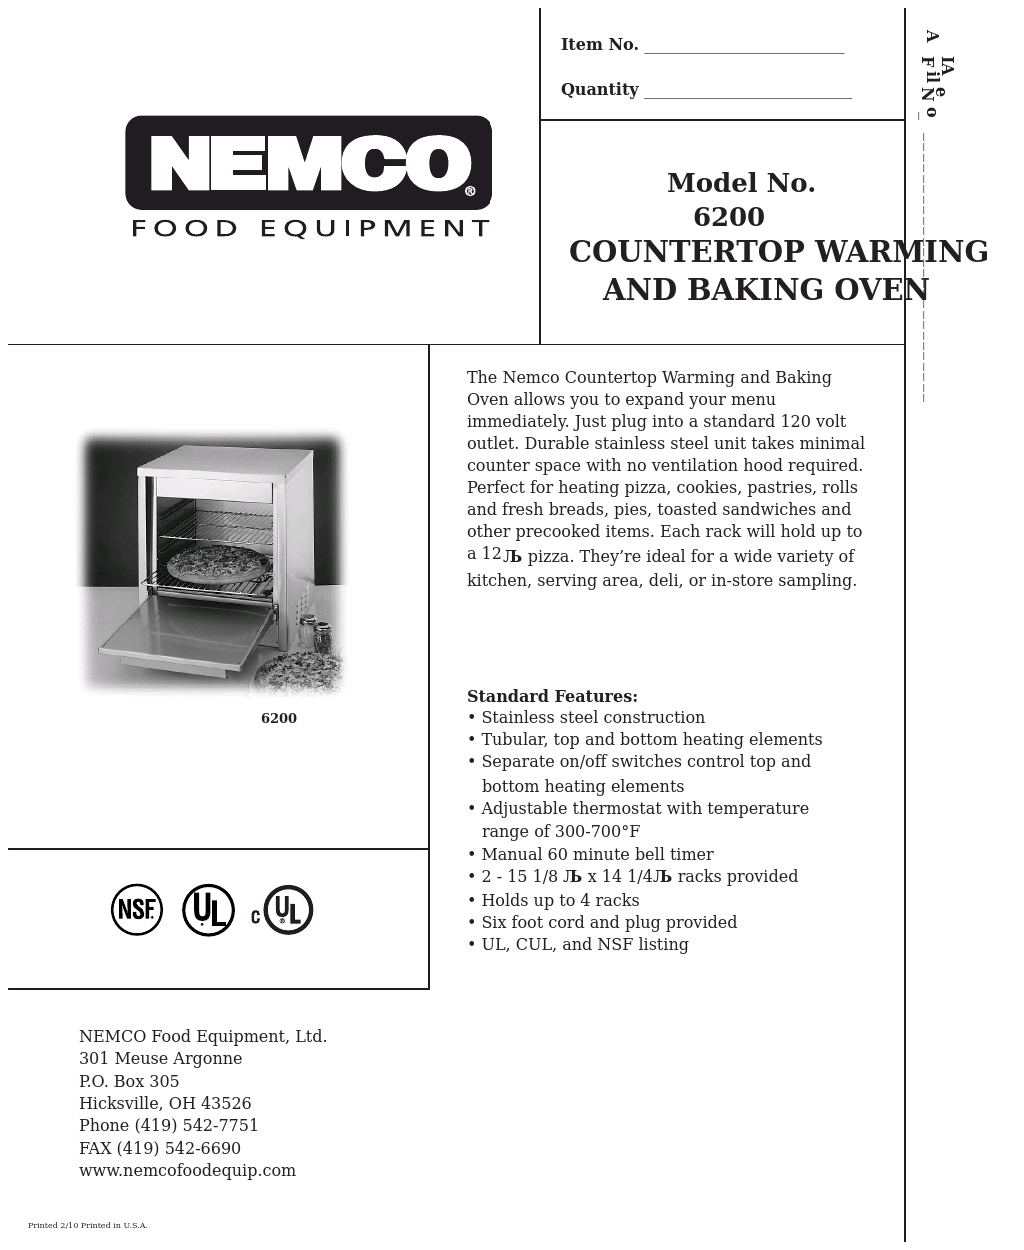 Countertop Warming & Baking Oven - Spec Sheet